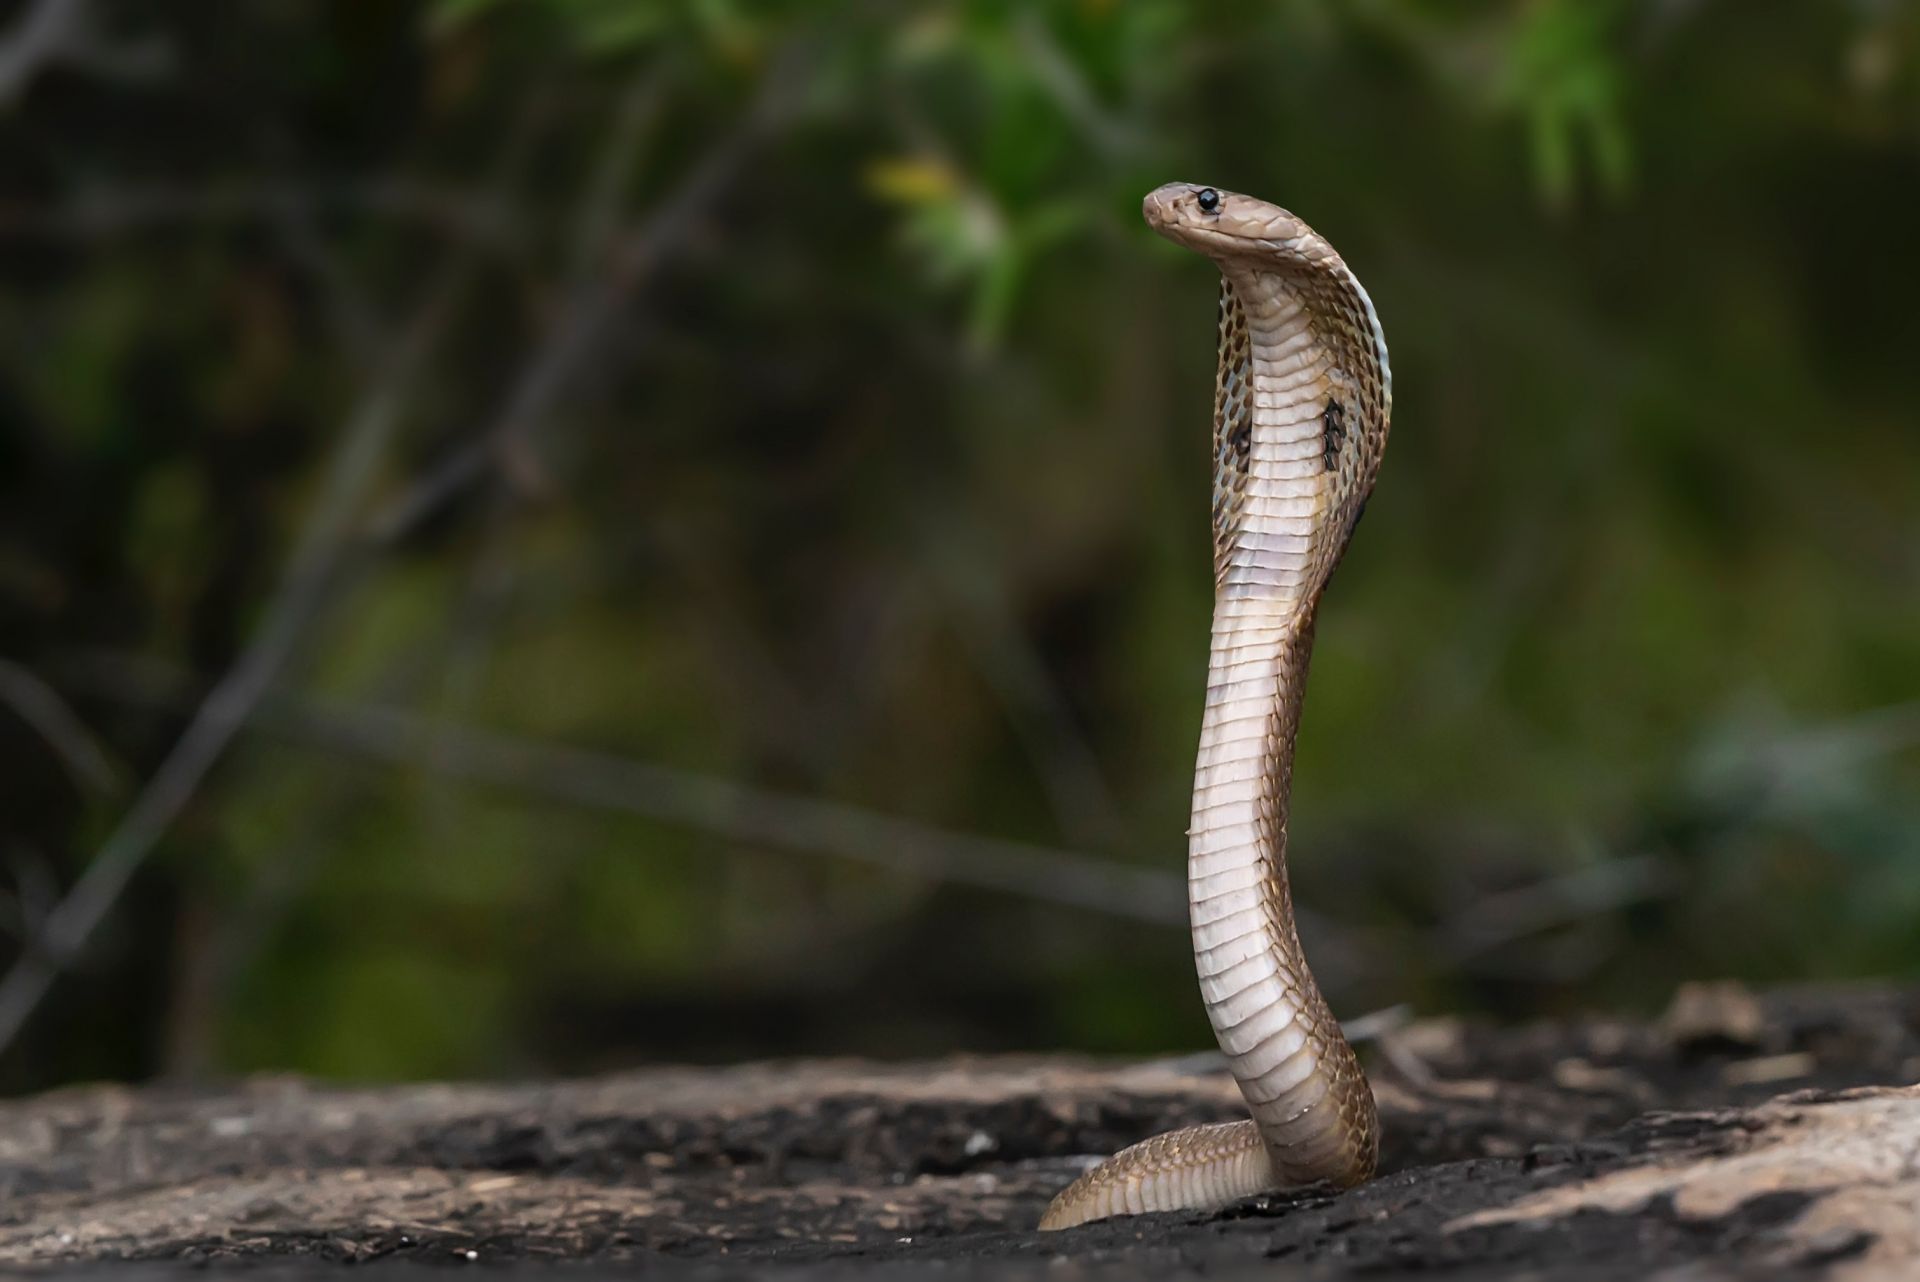 Snakes Deadly Global Toll Jcu Australia